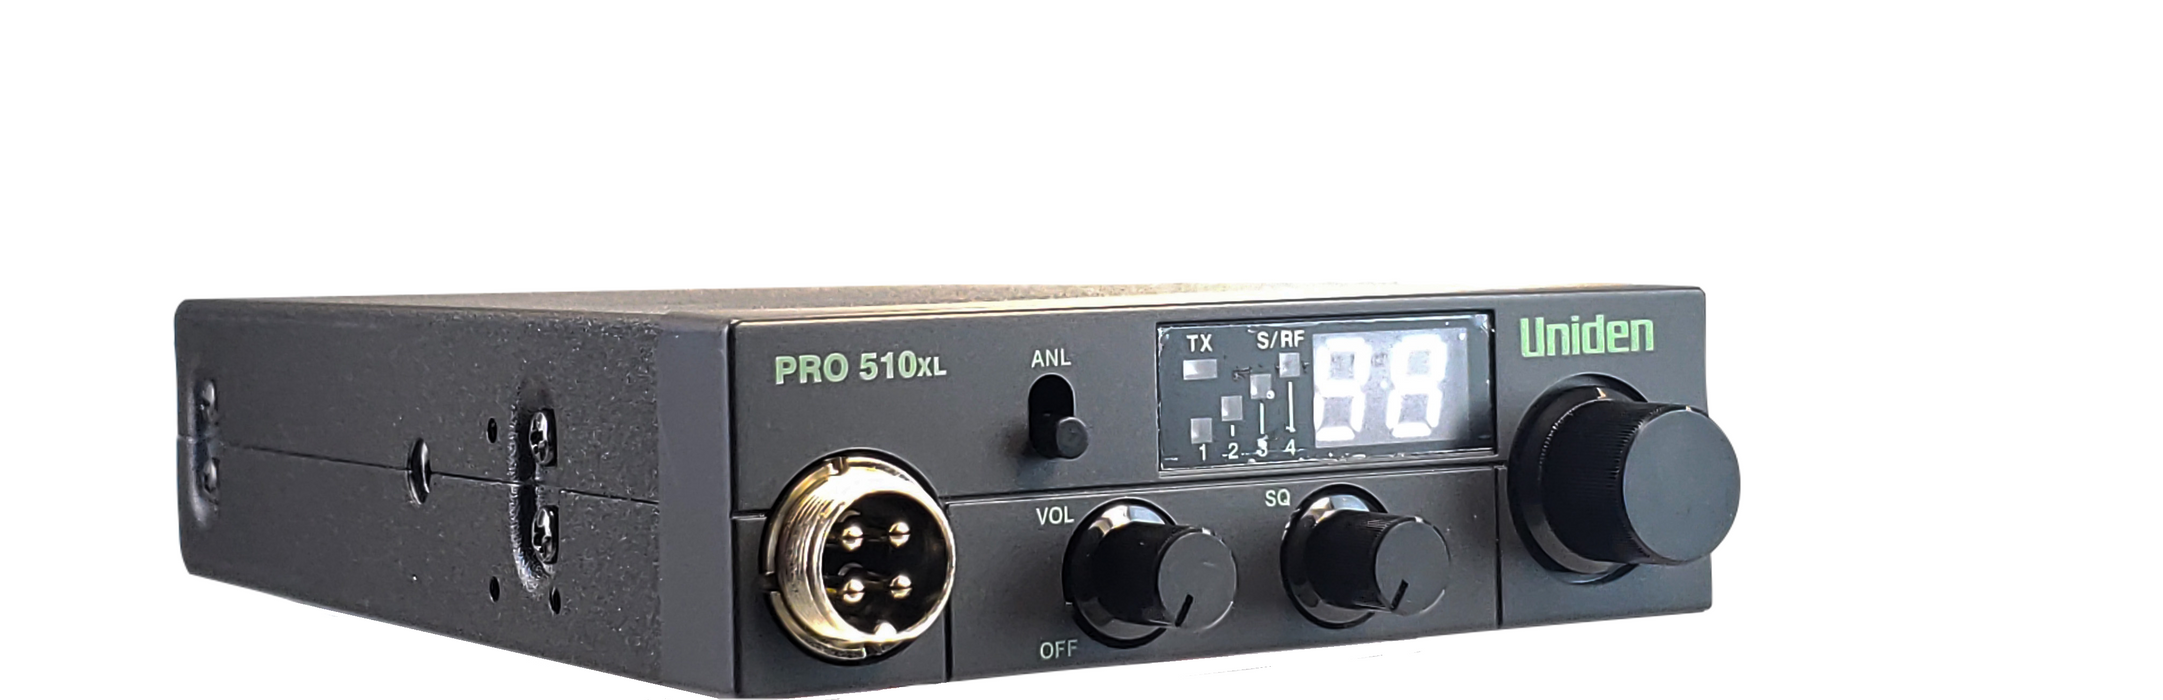 PRO510XL Compact Mobile CB Radio